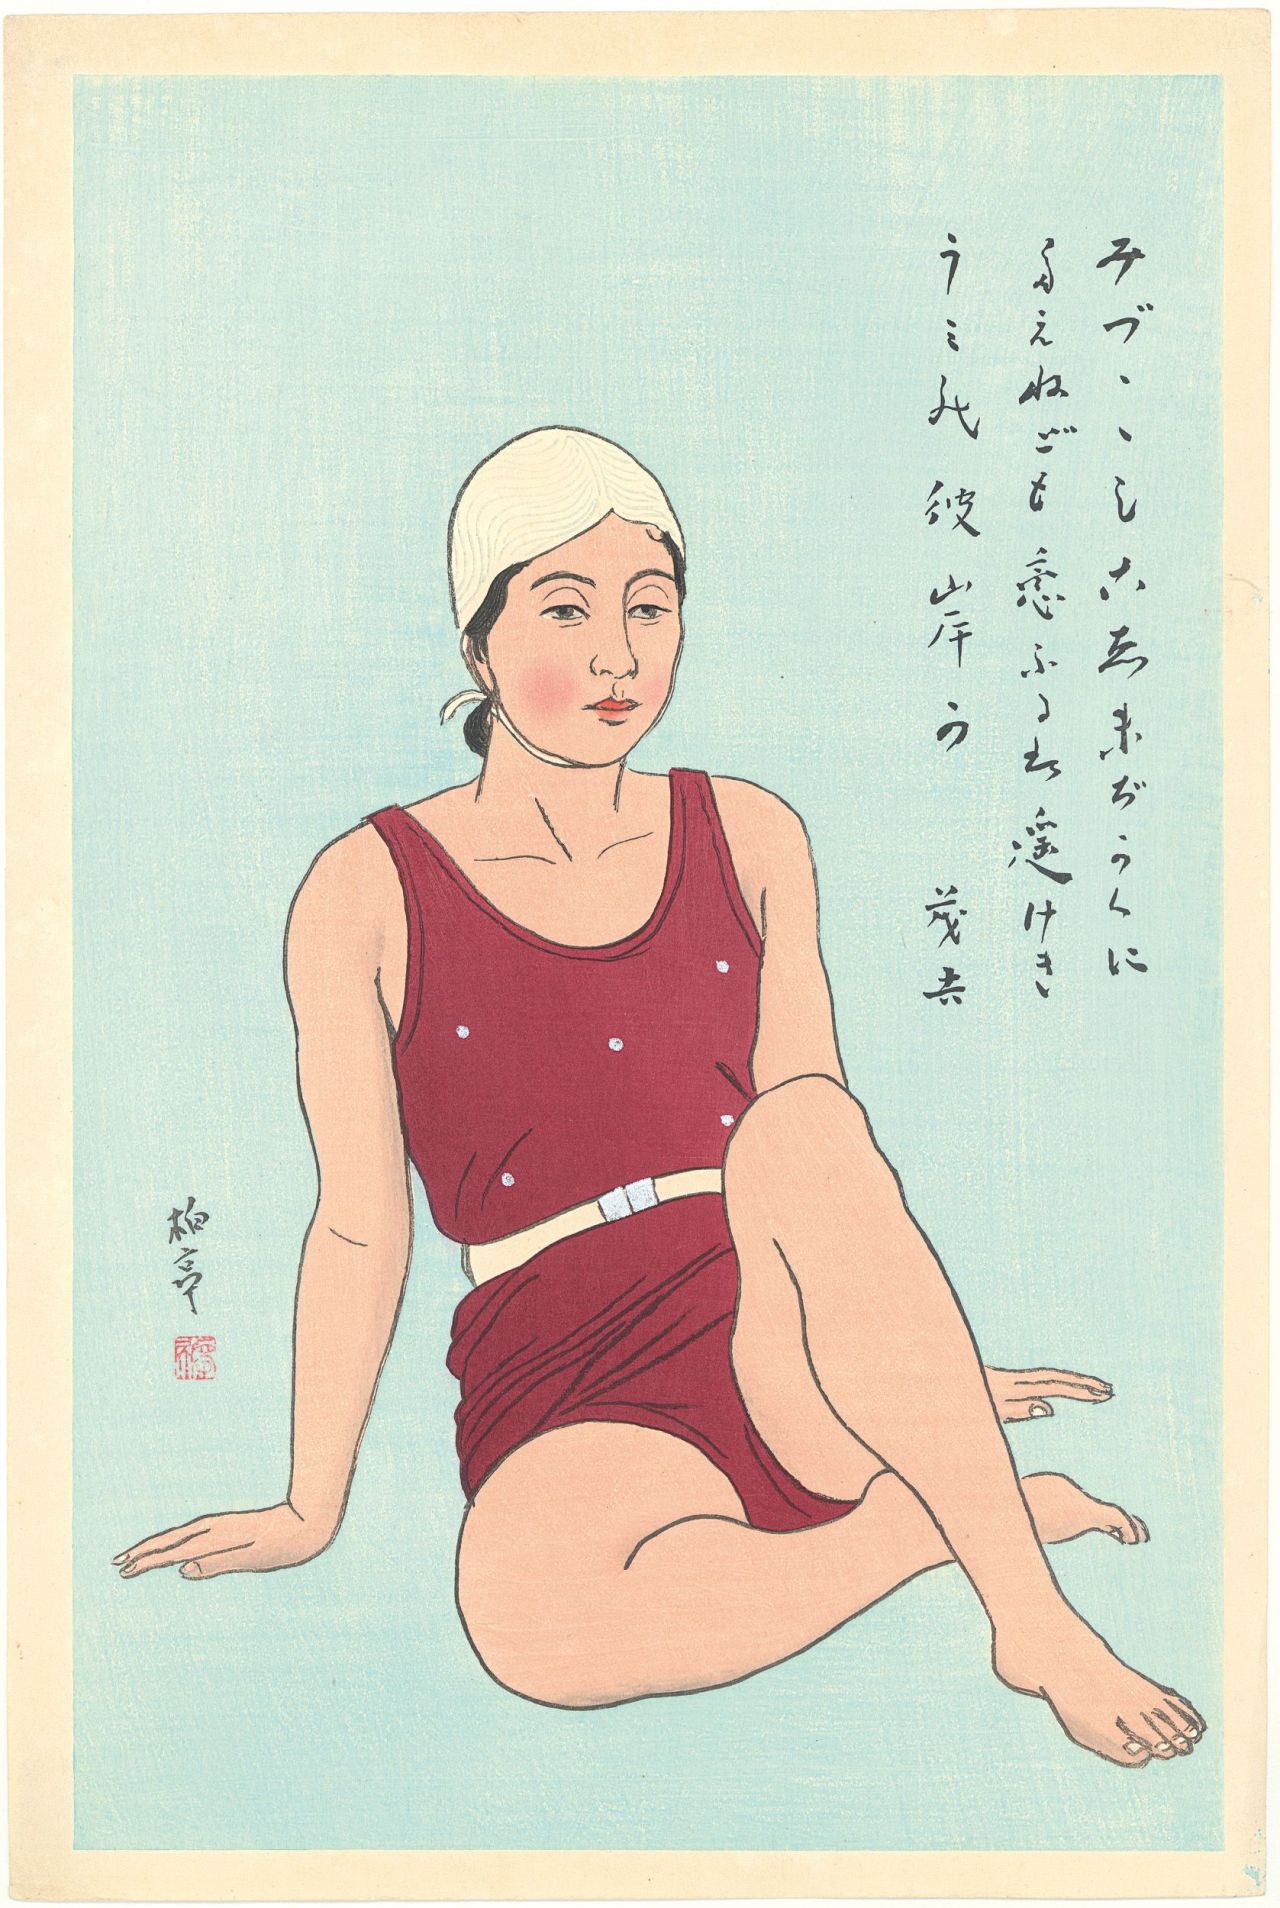 nobrashfestivity: “ Ishii Hakutei, Bathing suit from the series Twelve images of modern women, 1932 ”